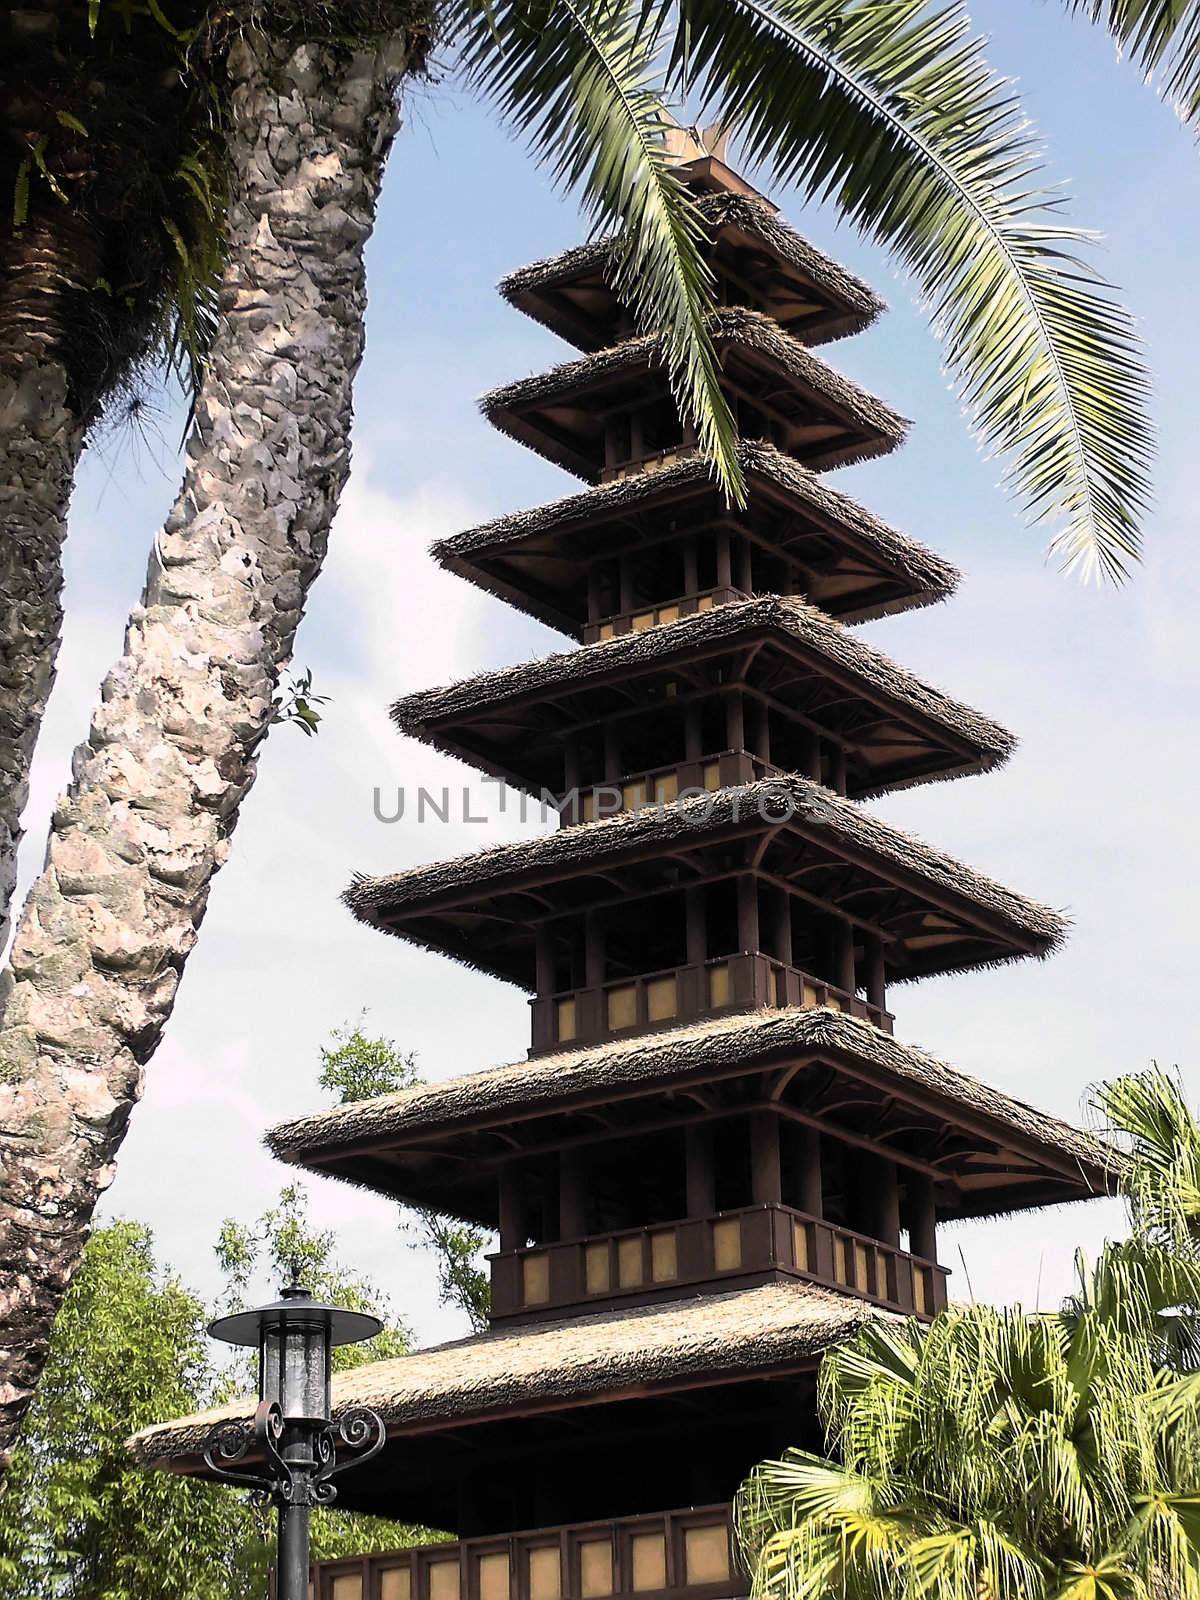 Oriental Series - Photos depicting various details of Oriental structures